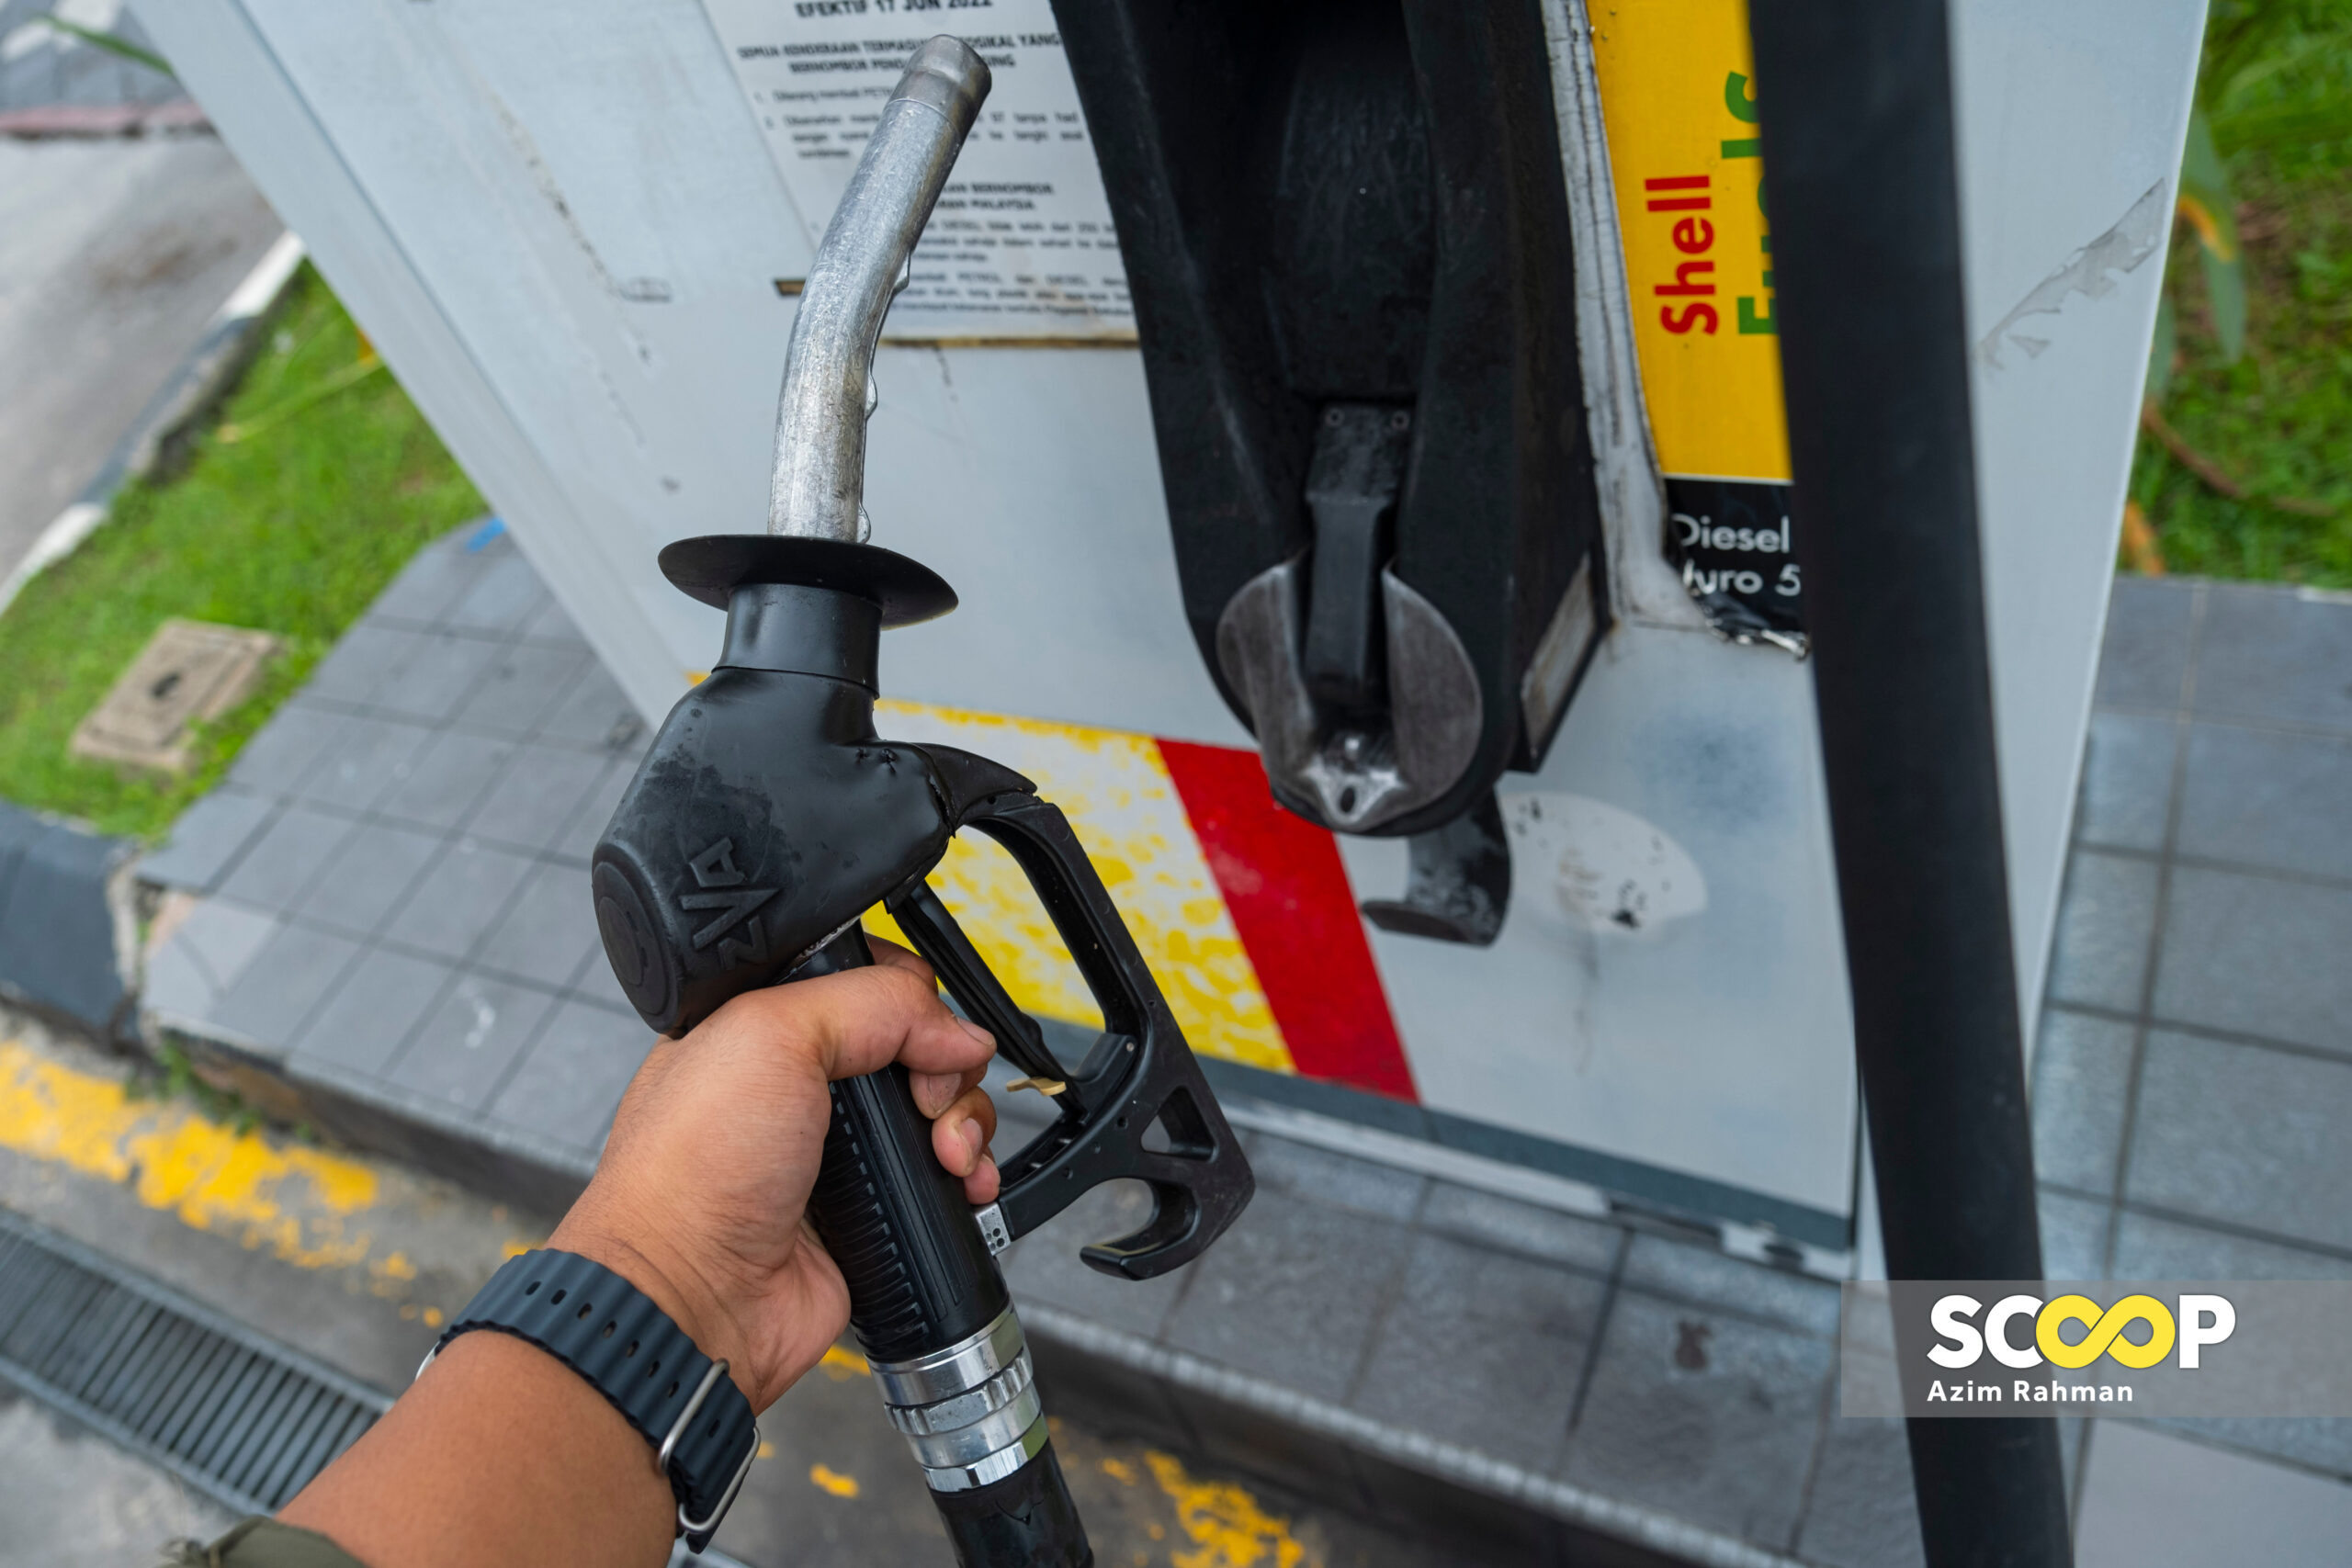 No RON95 subsidy news yet: govt reaffirms focus on targeted diesel subsidies